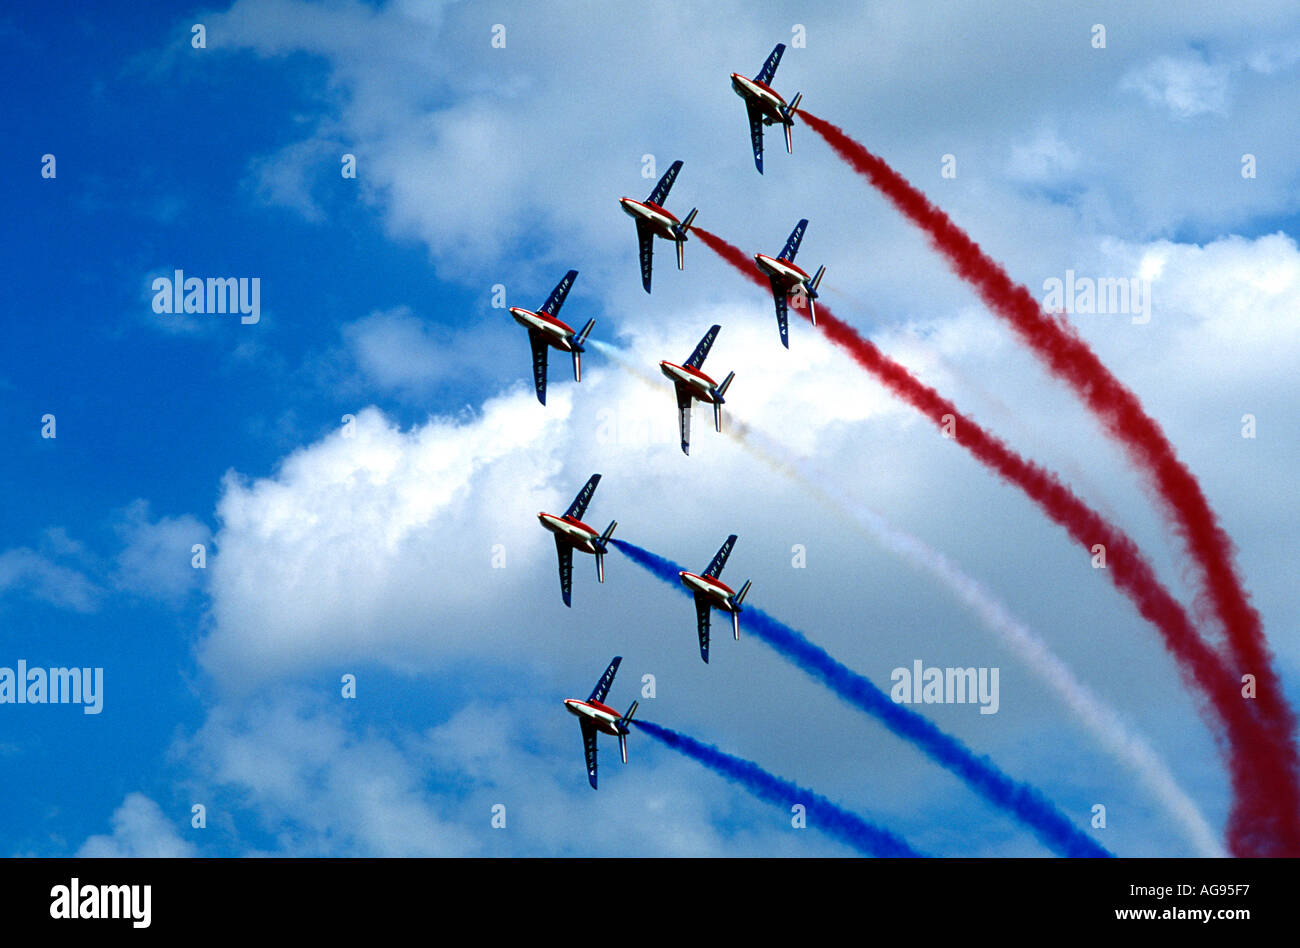 Patrouille De France French Aerobatic Display Team Stock Photo